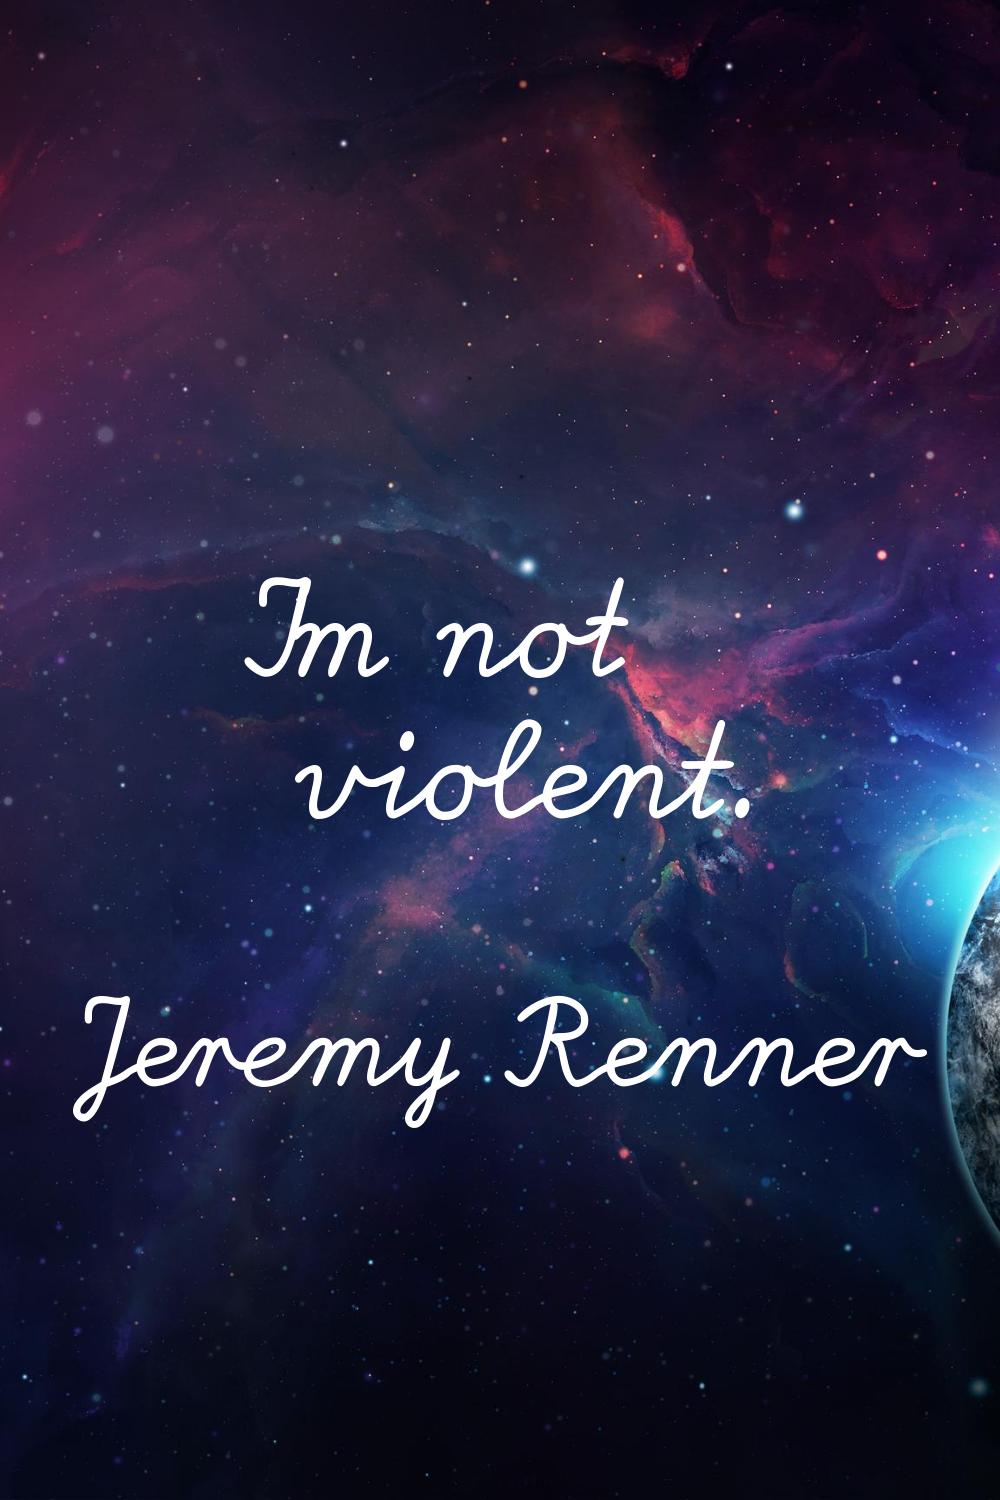 I'm not violent.